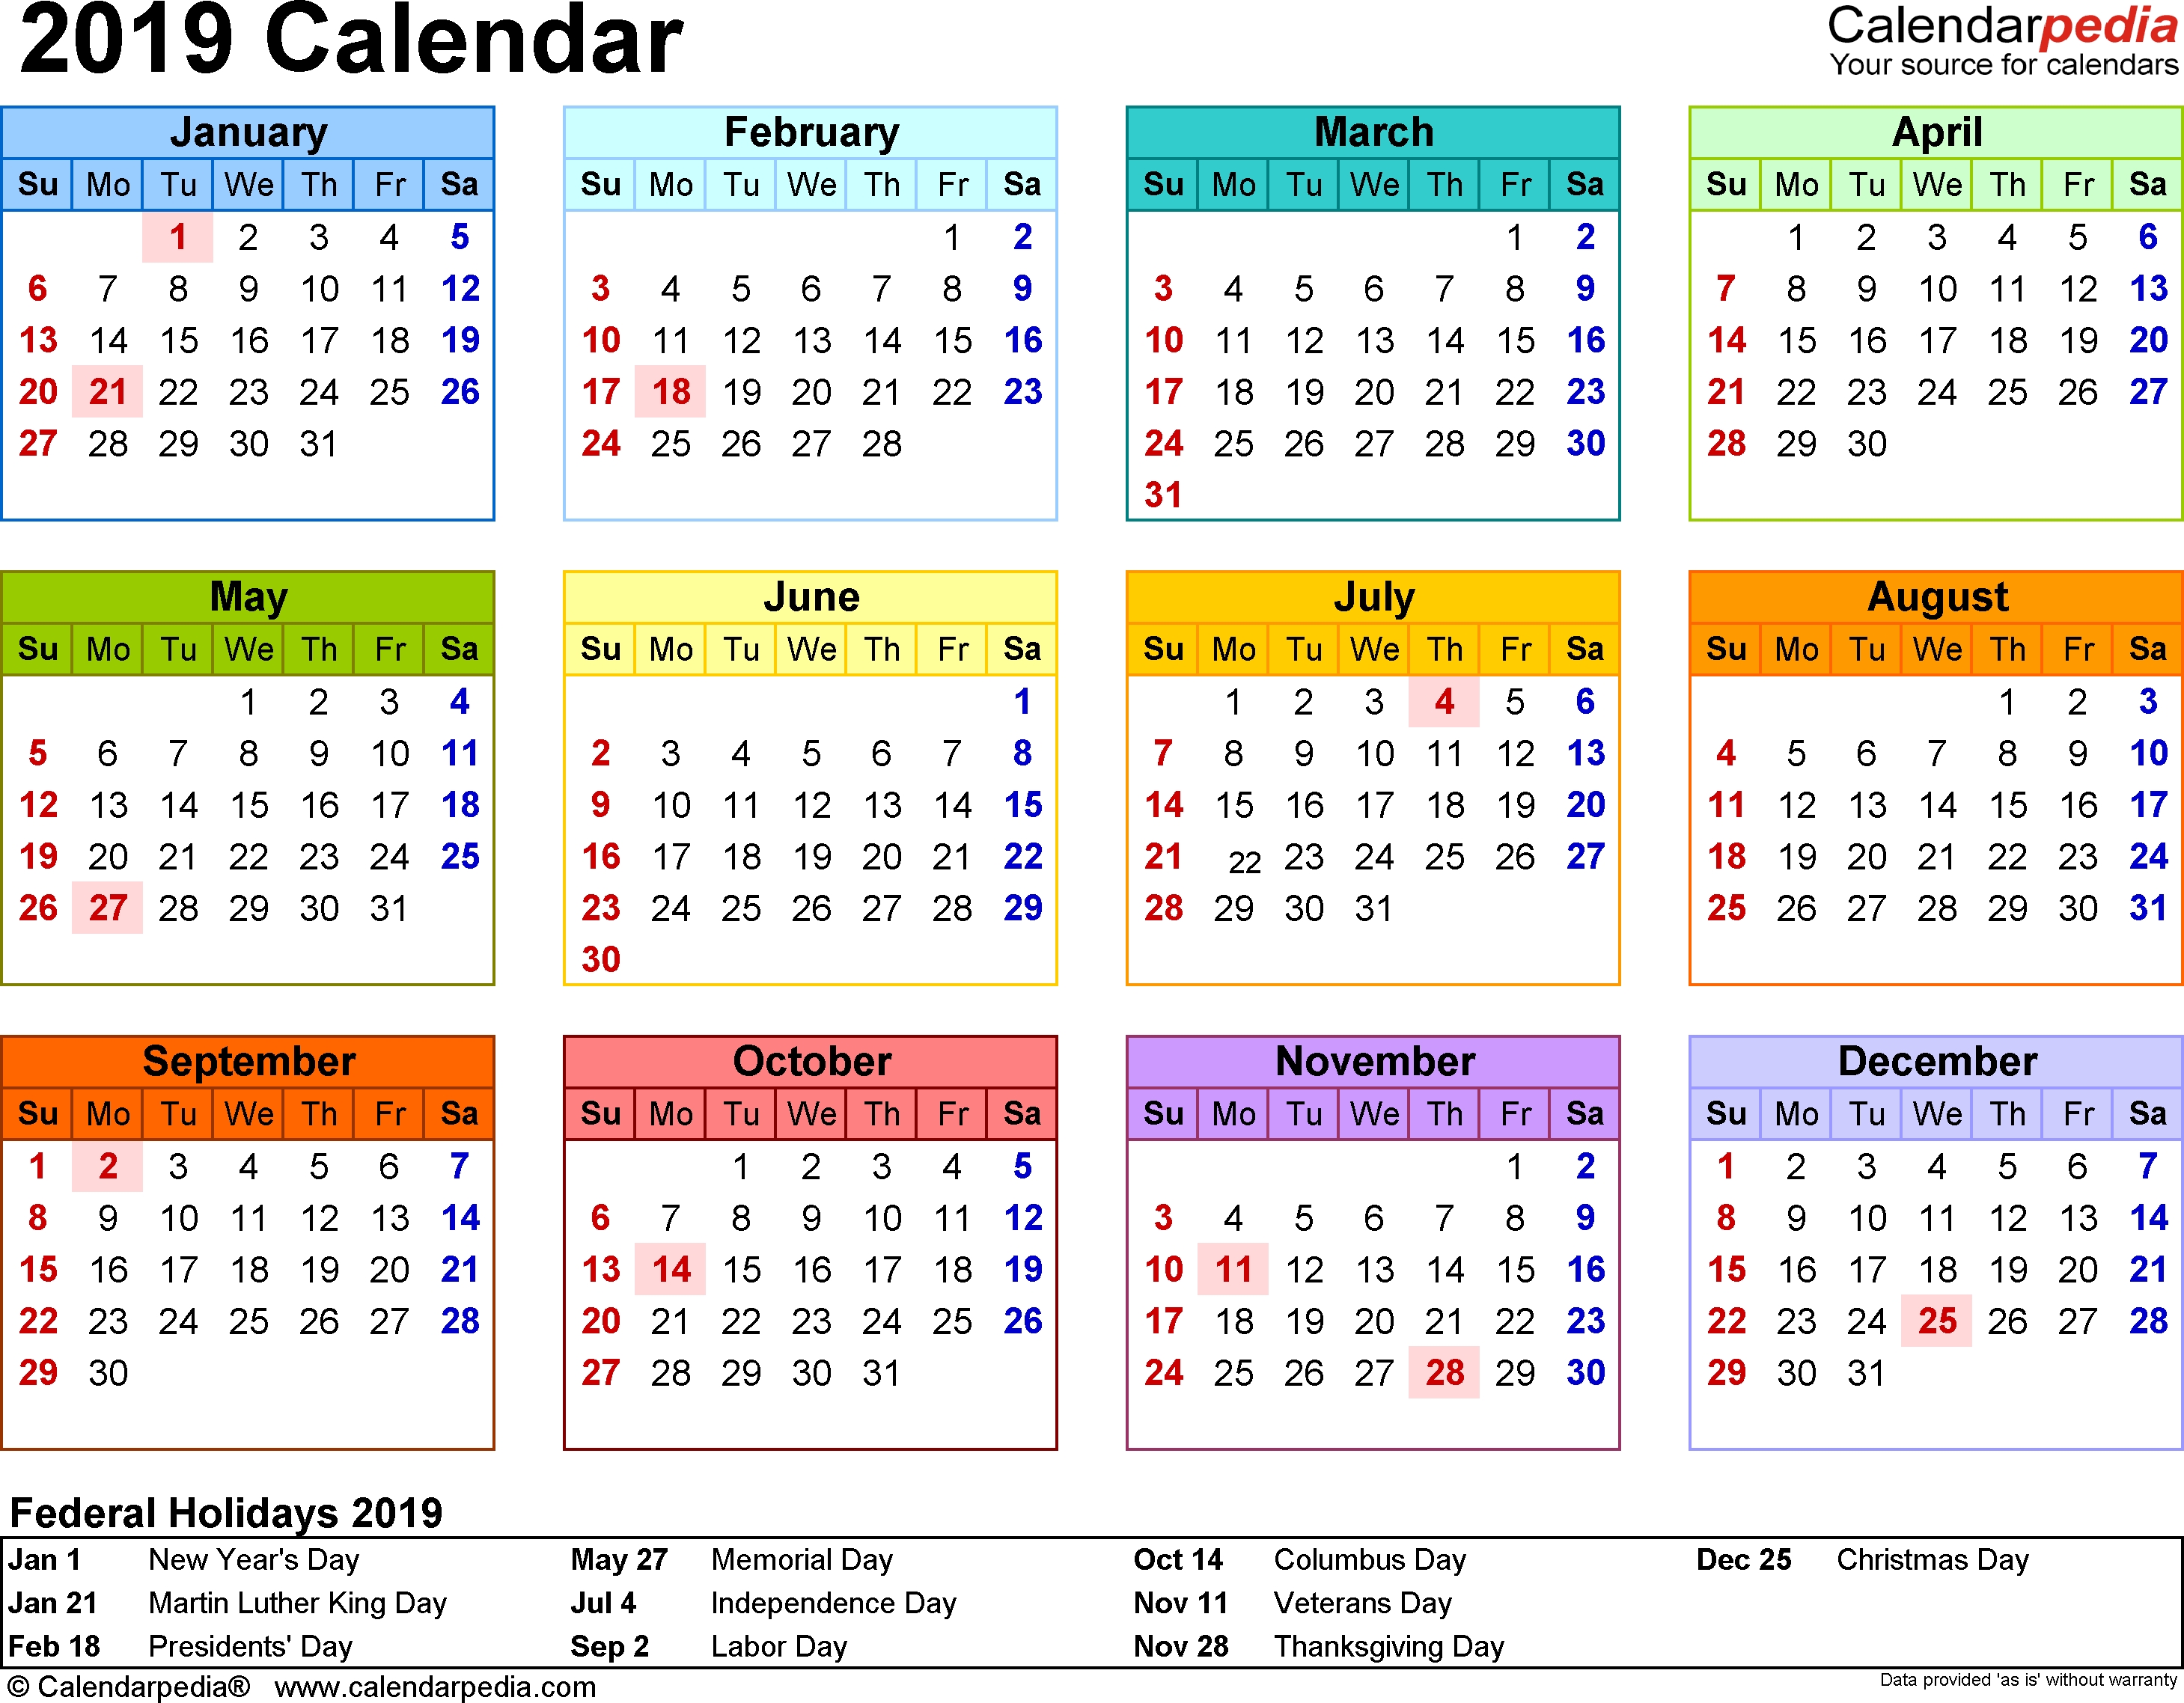 2019 Calendar 17 Free Printable Word Calendar Templates